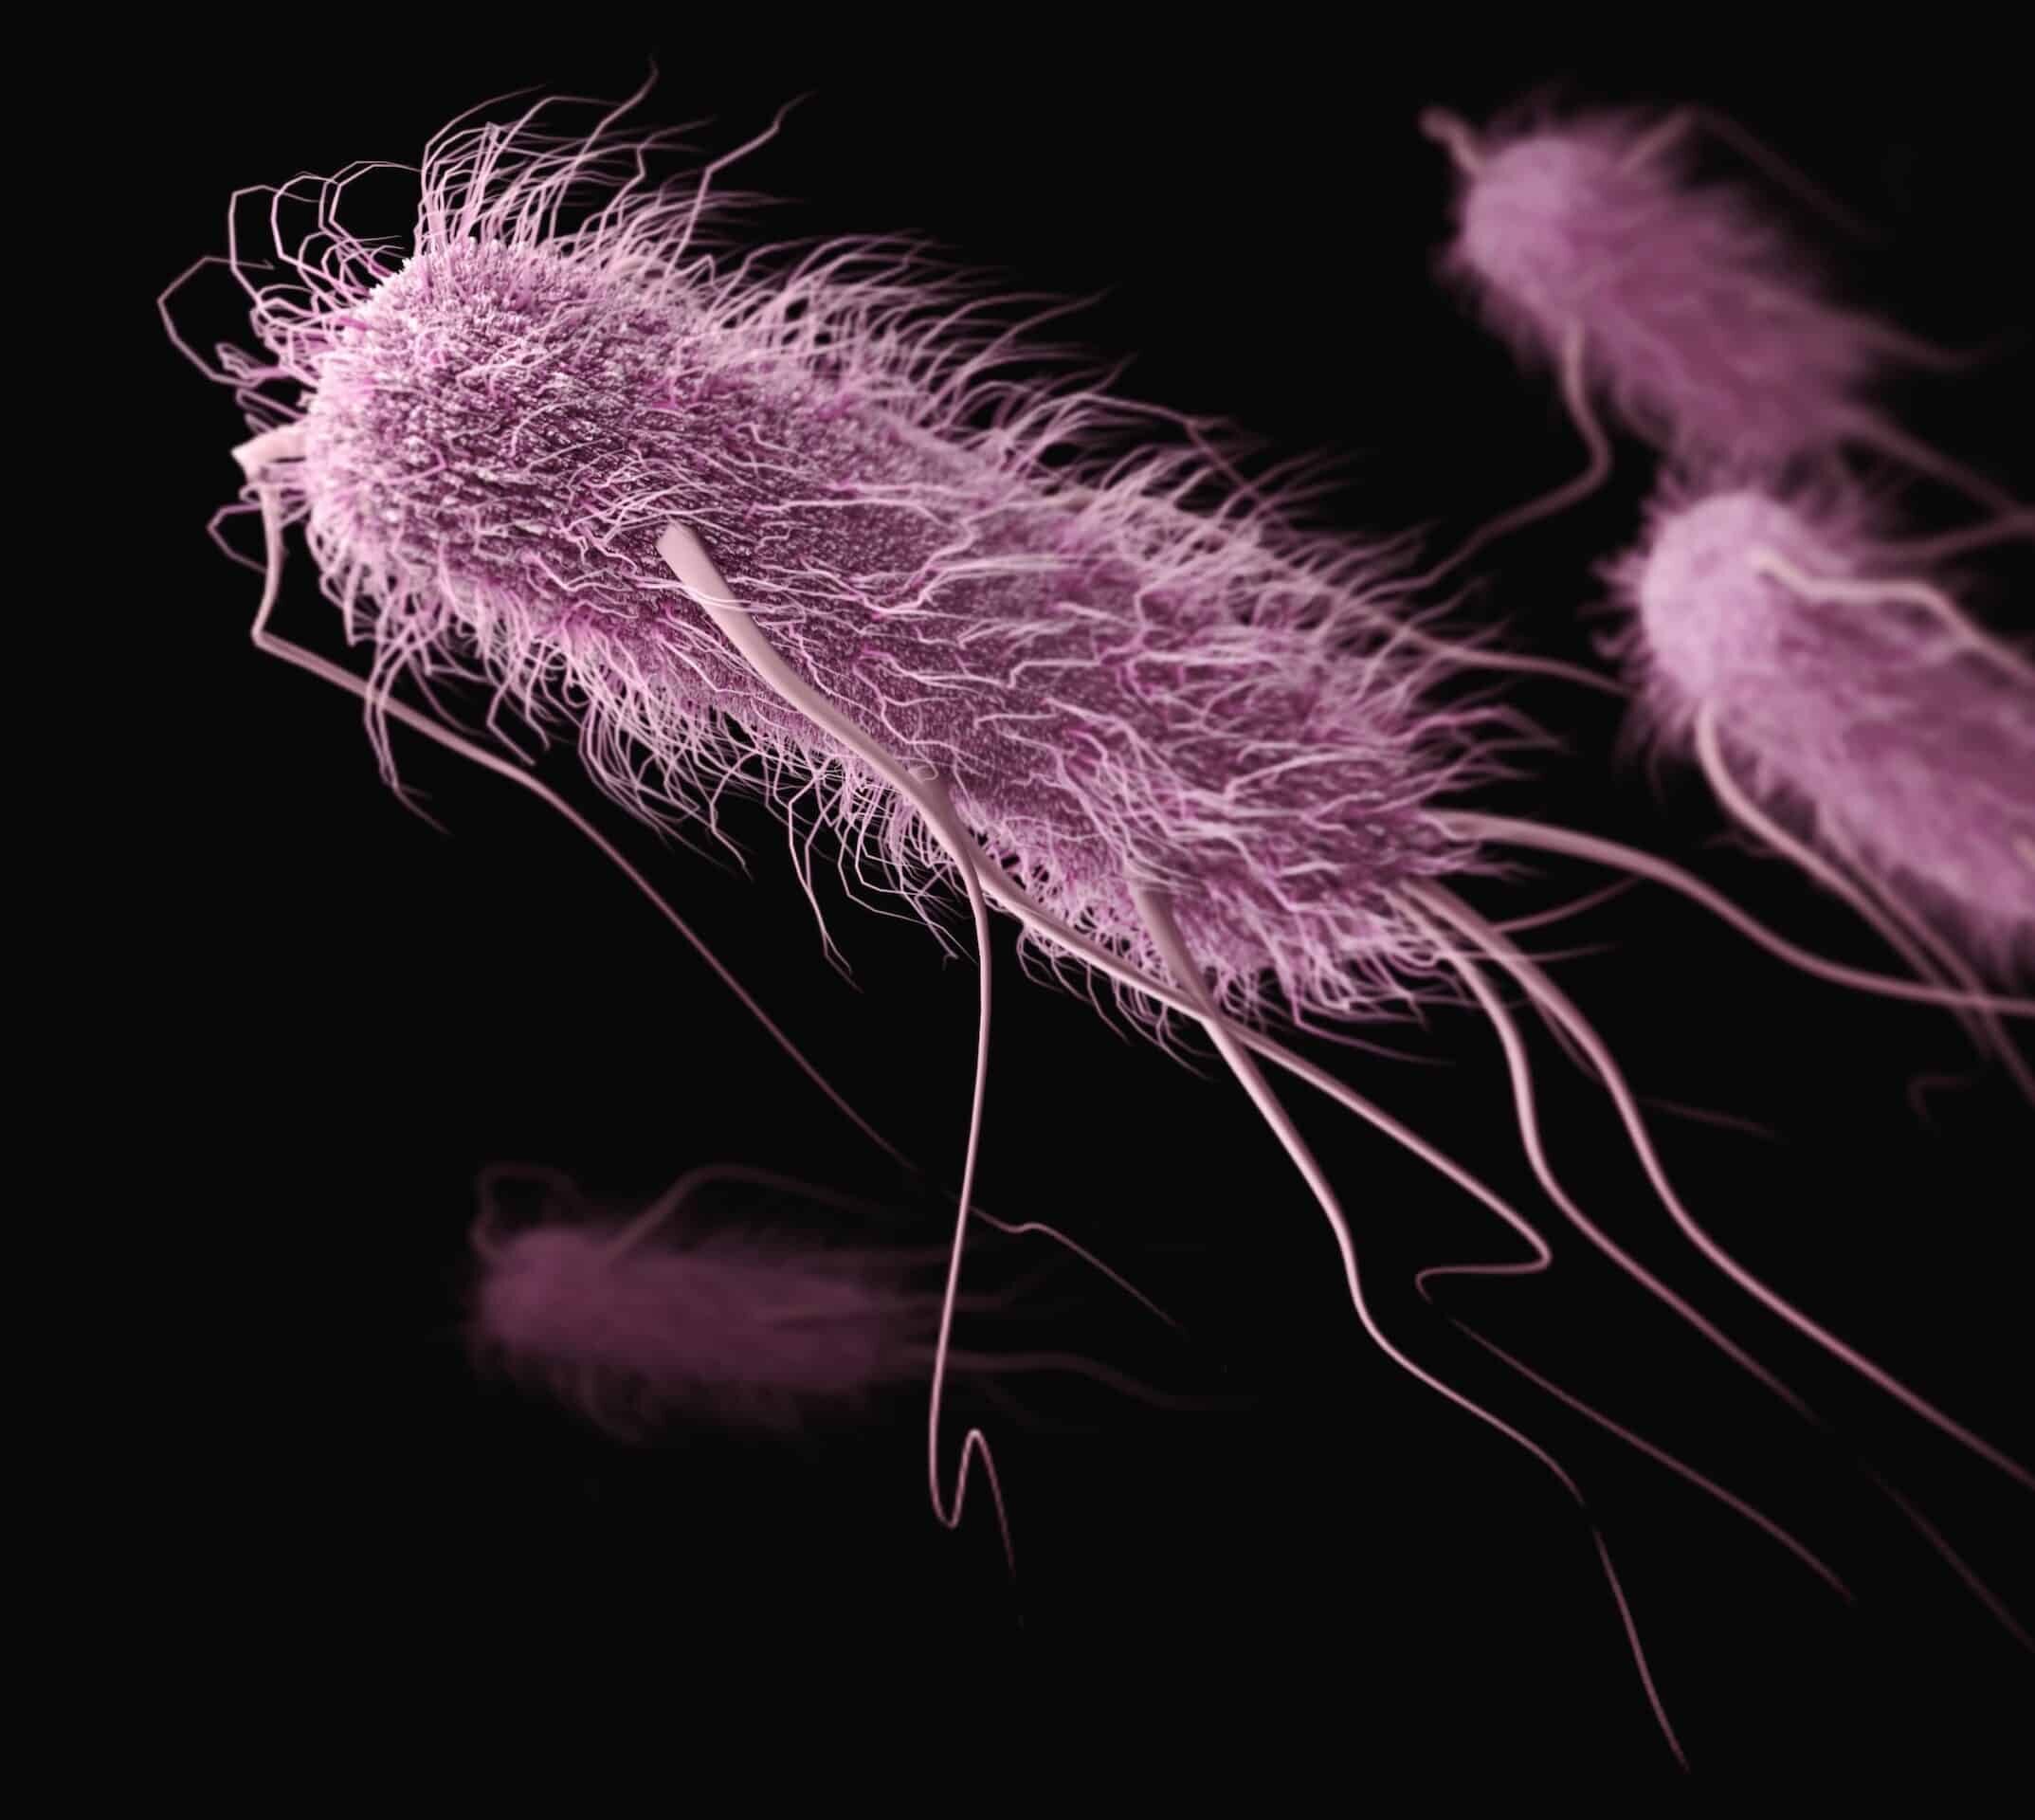 Escherichia coli что это у мужчин. Бактерия сальмонелла Тифи. Сальмонелла Тифи микробиология. Salmonella typhi микробиология. Строение бактерии Salmonella typhi.